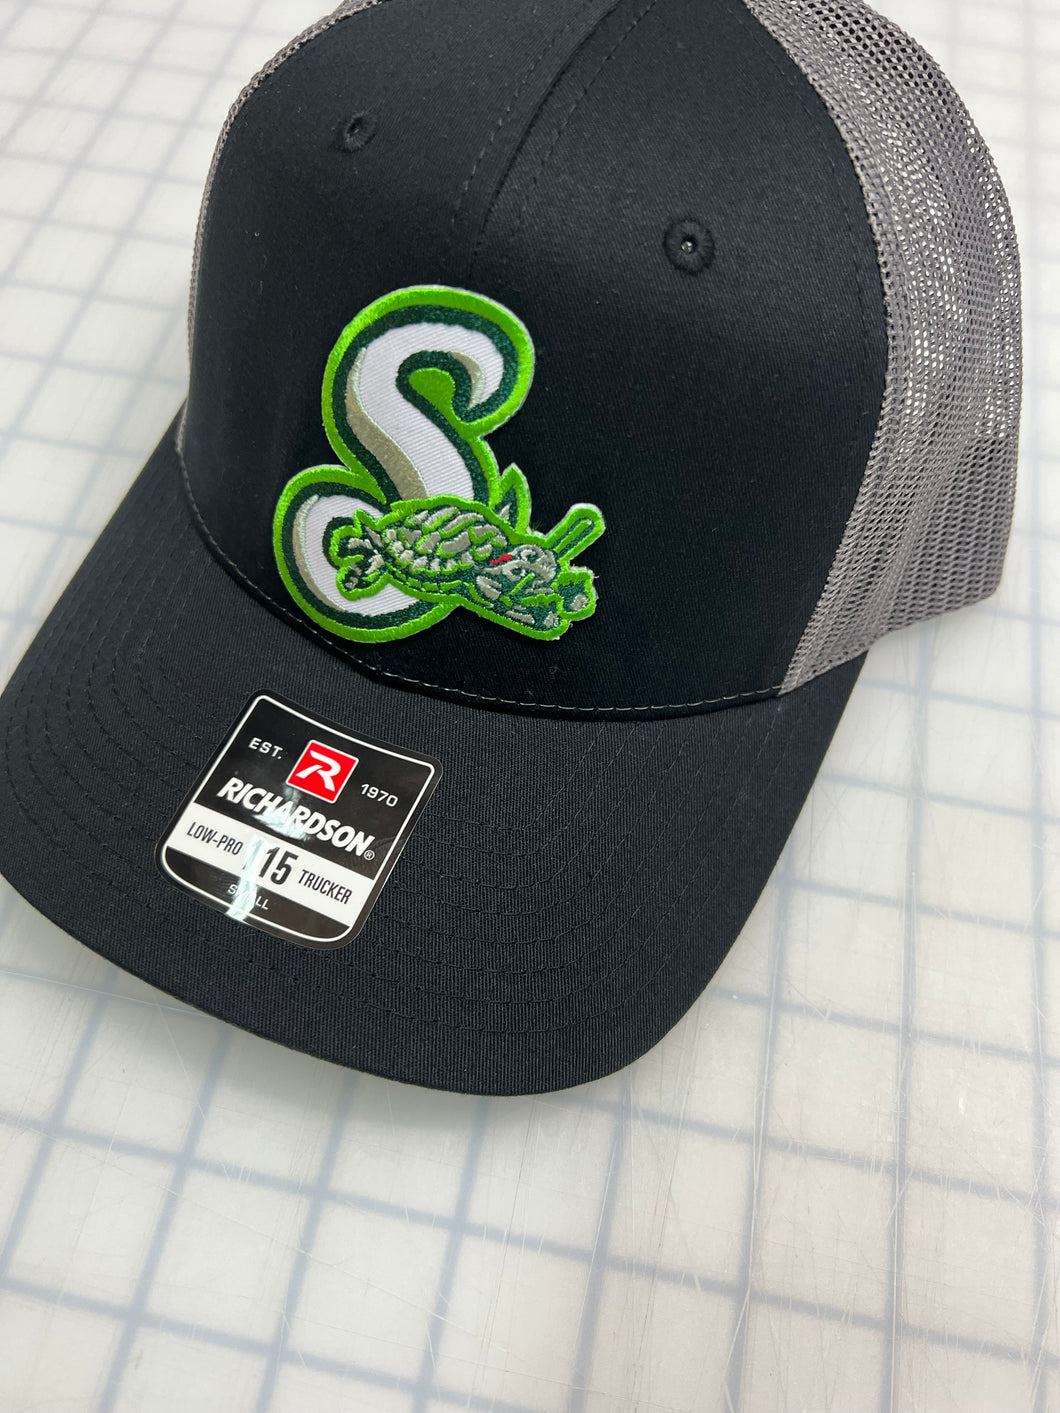 Sliders Little League Baseball Hat & Helmet Decal